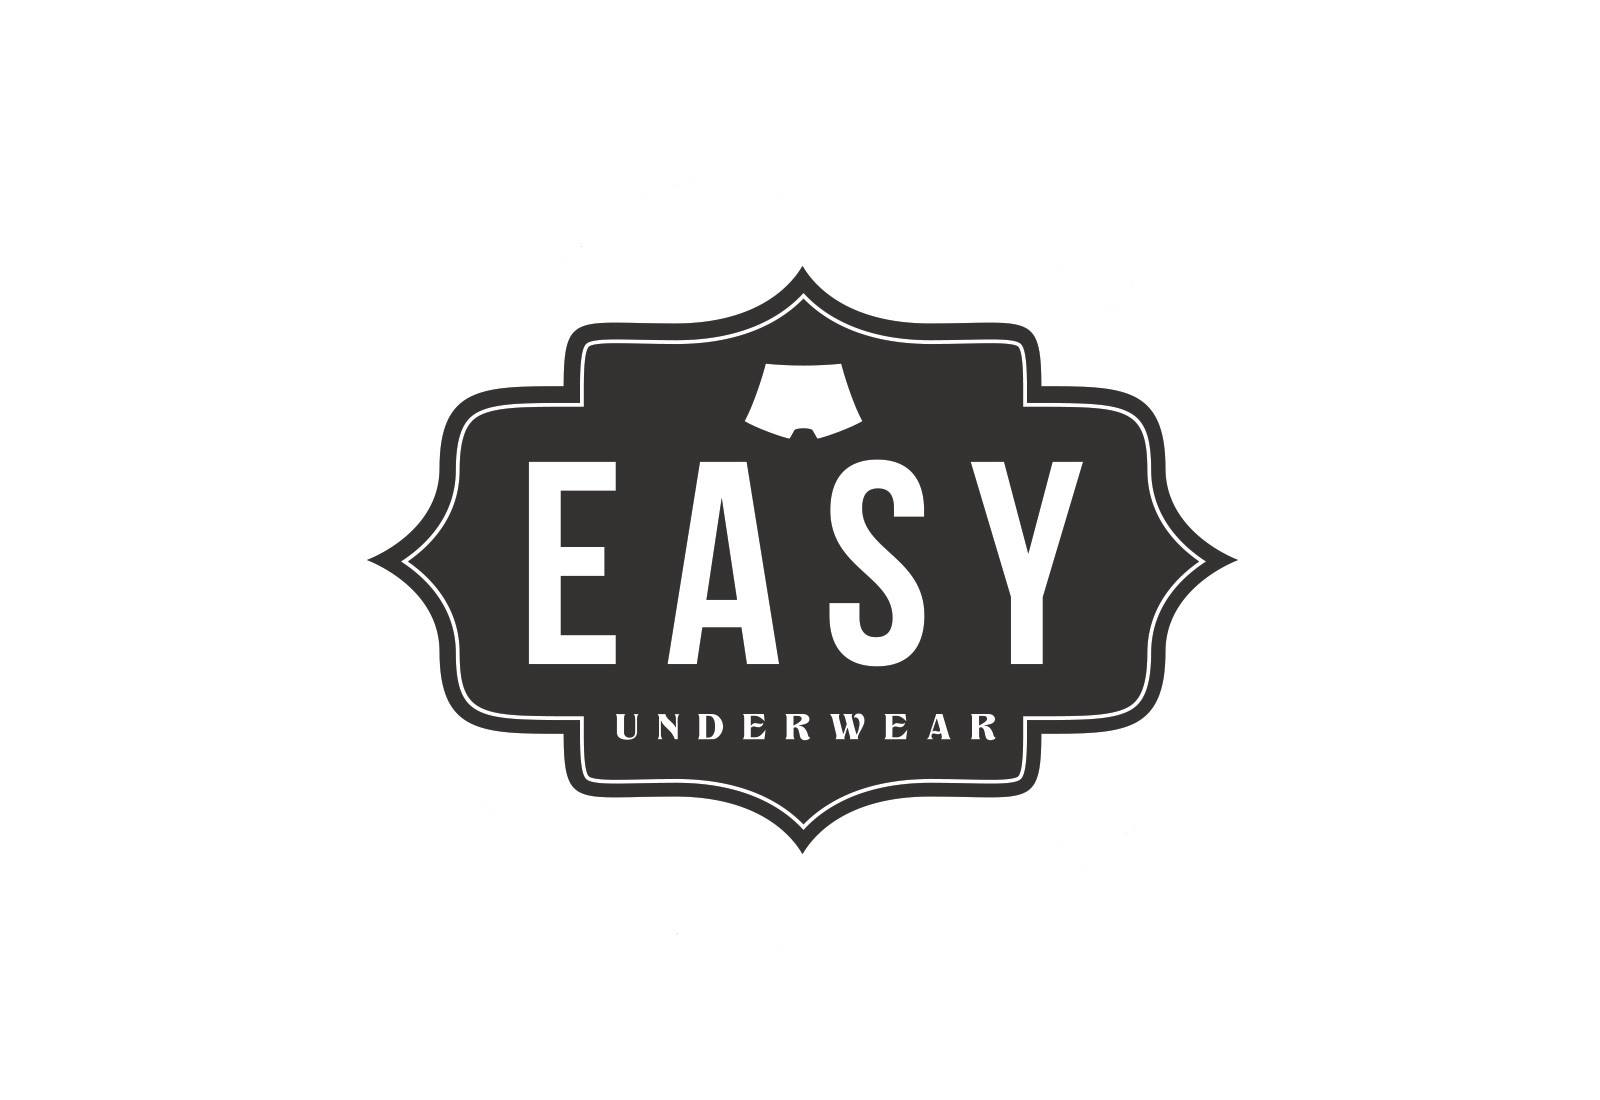 Easy underwear logo